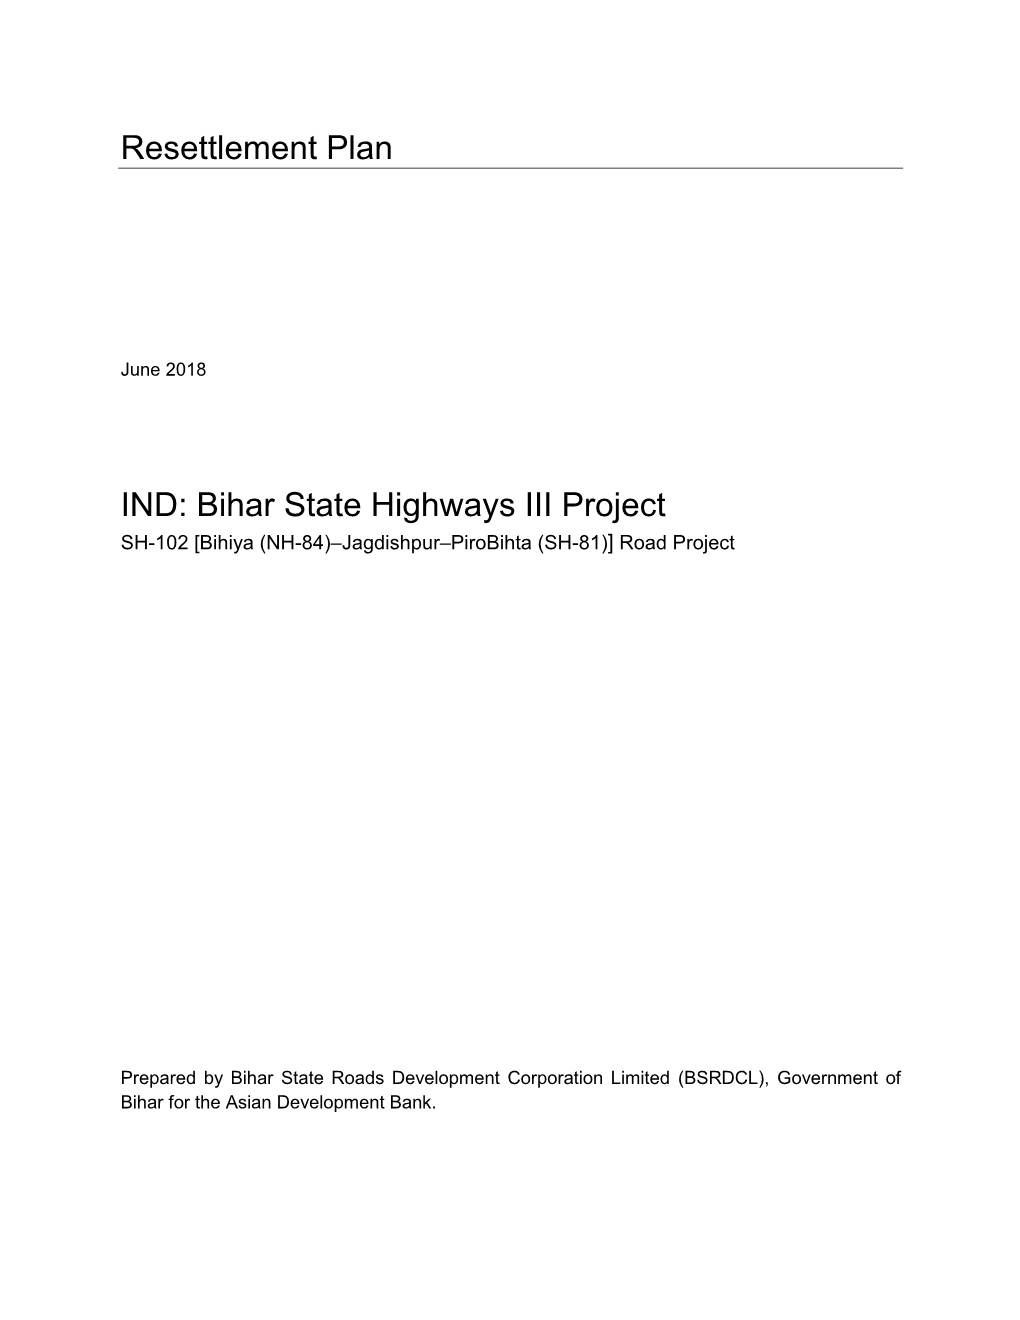 Resettlement Plan: Bihiya–Jagdishpur–Pirobihta